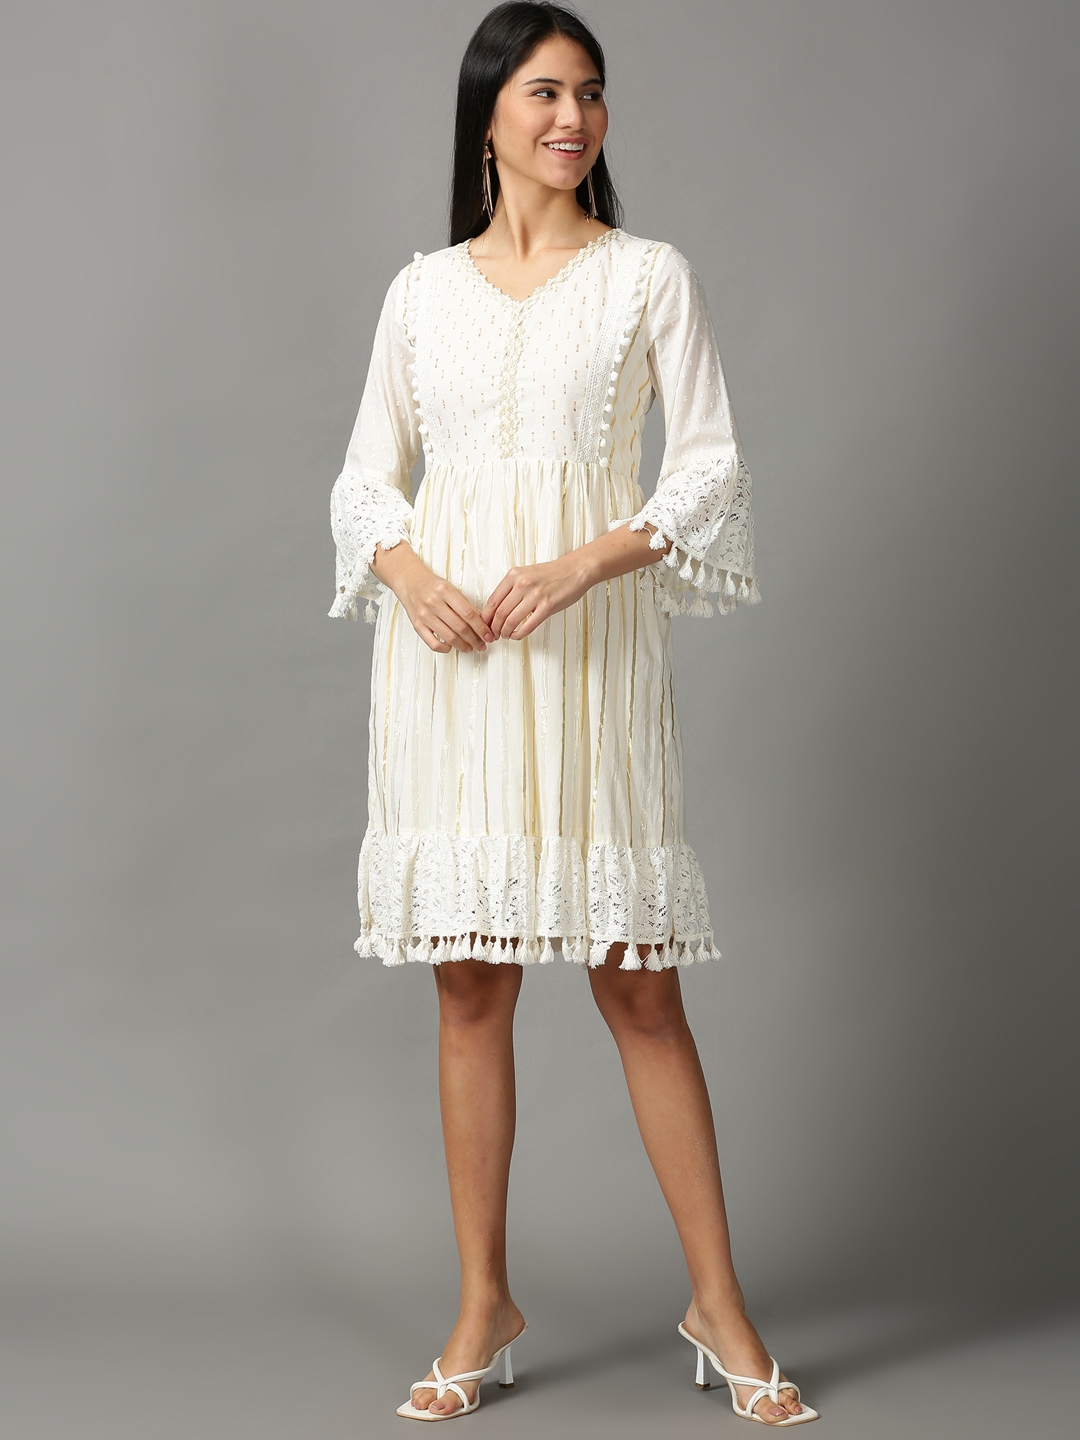 Women's White Cotton Solid Dresses